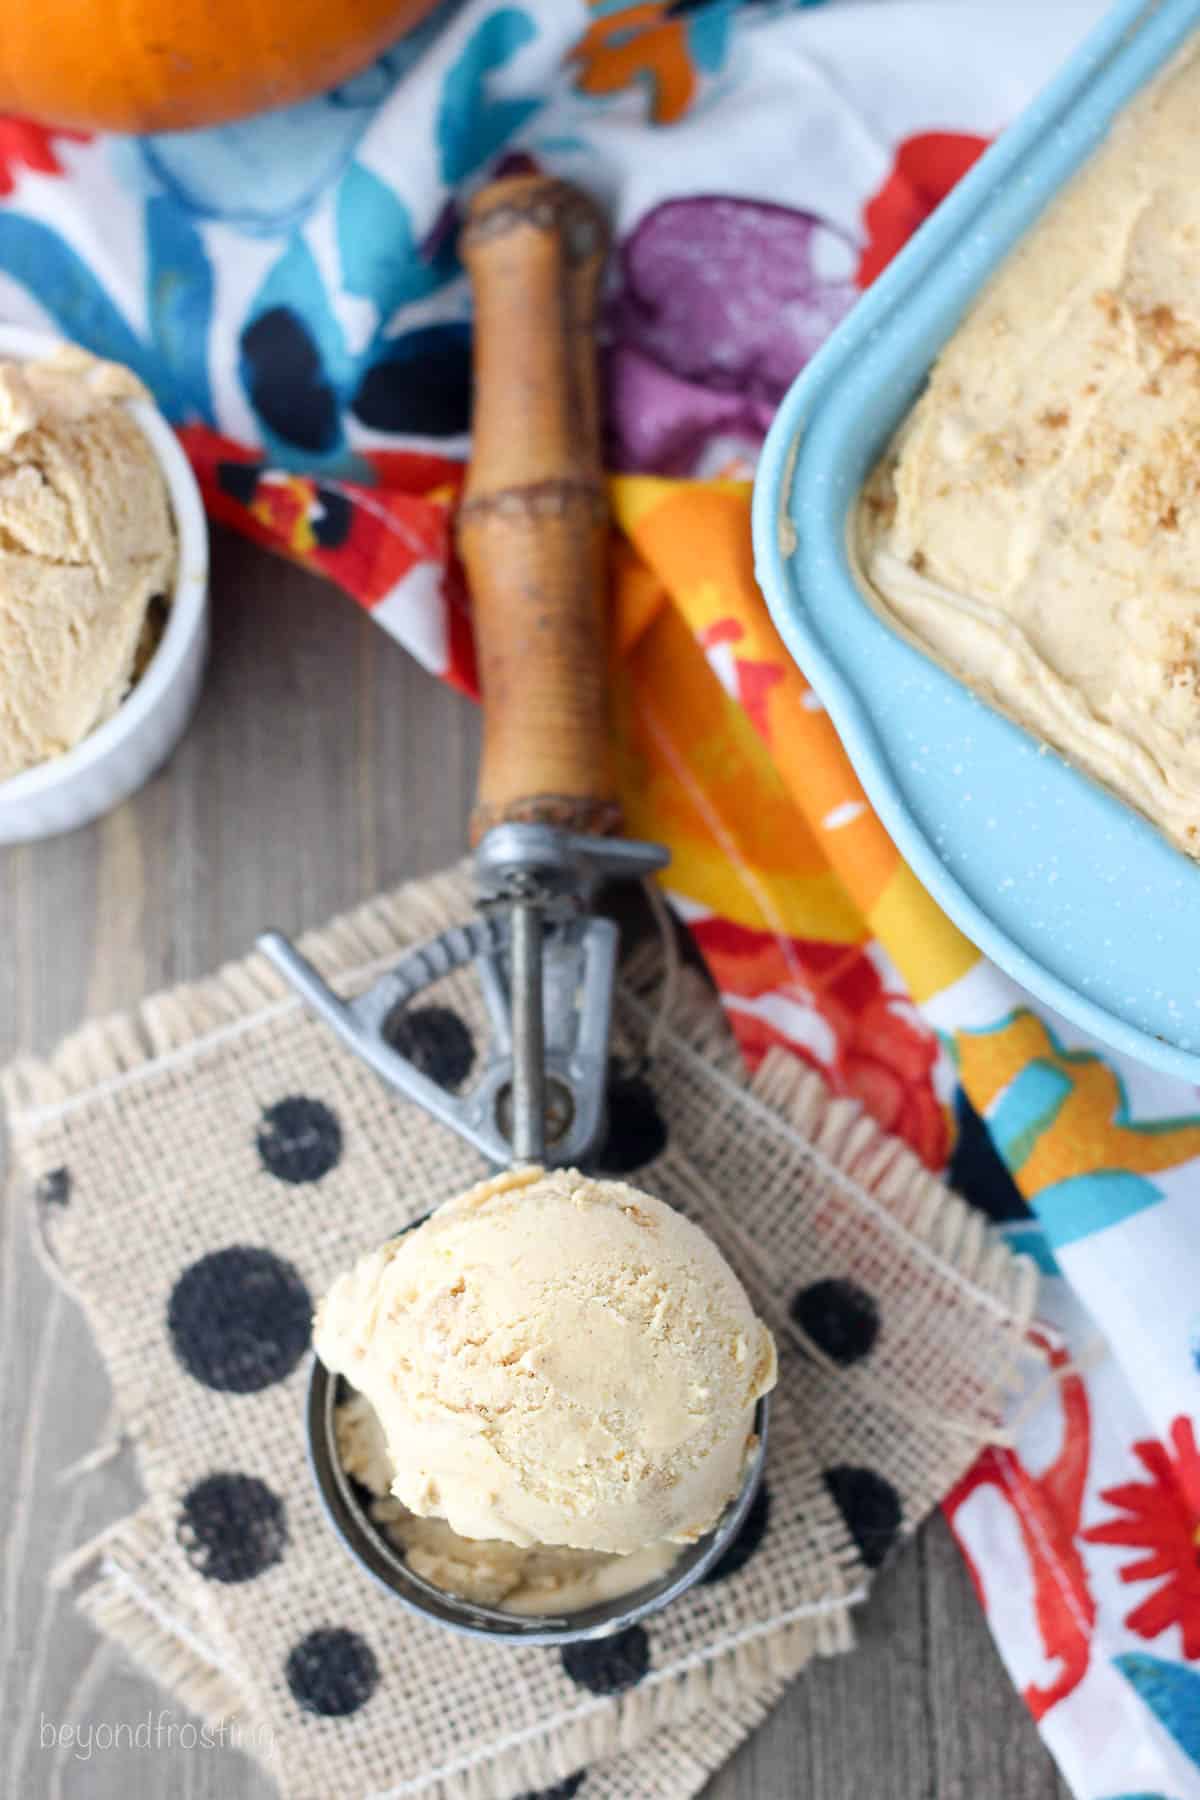 Pumpkin ice cream in an ice cream scoop